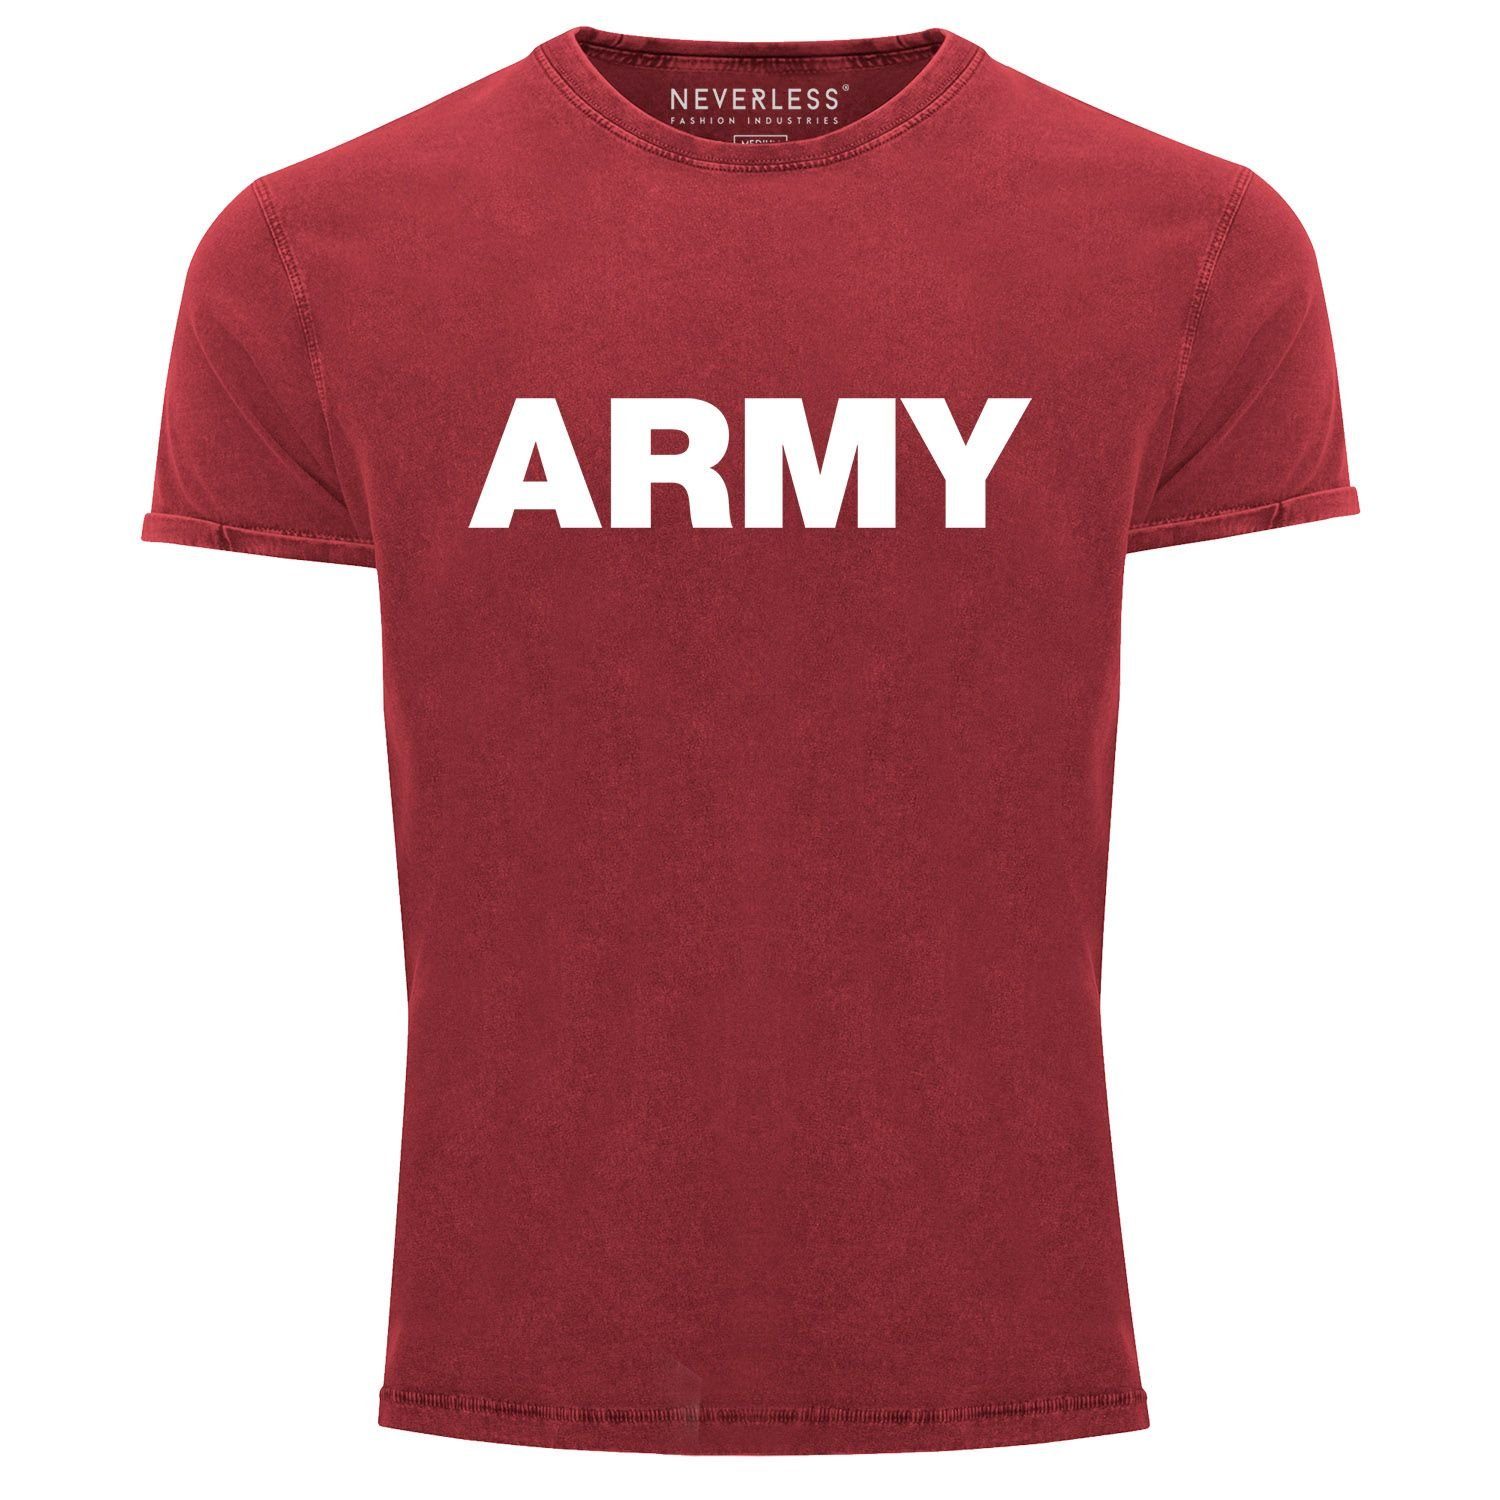 T-Shirt Neverless Neverless® Printshirt Fit Slim rot Army Used Vintage mit Print-Shirt Herren Shirt Look Print